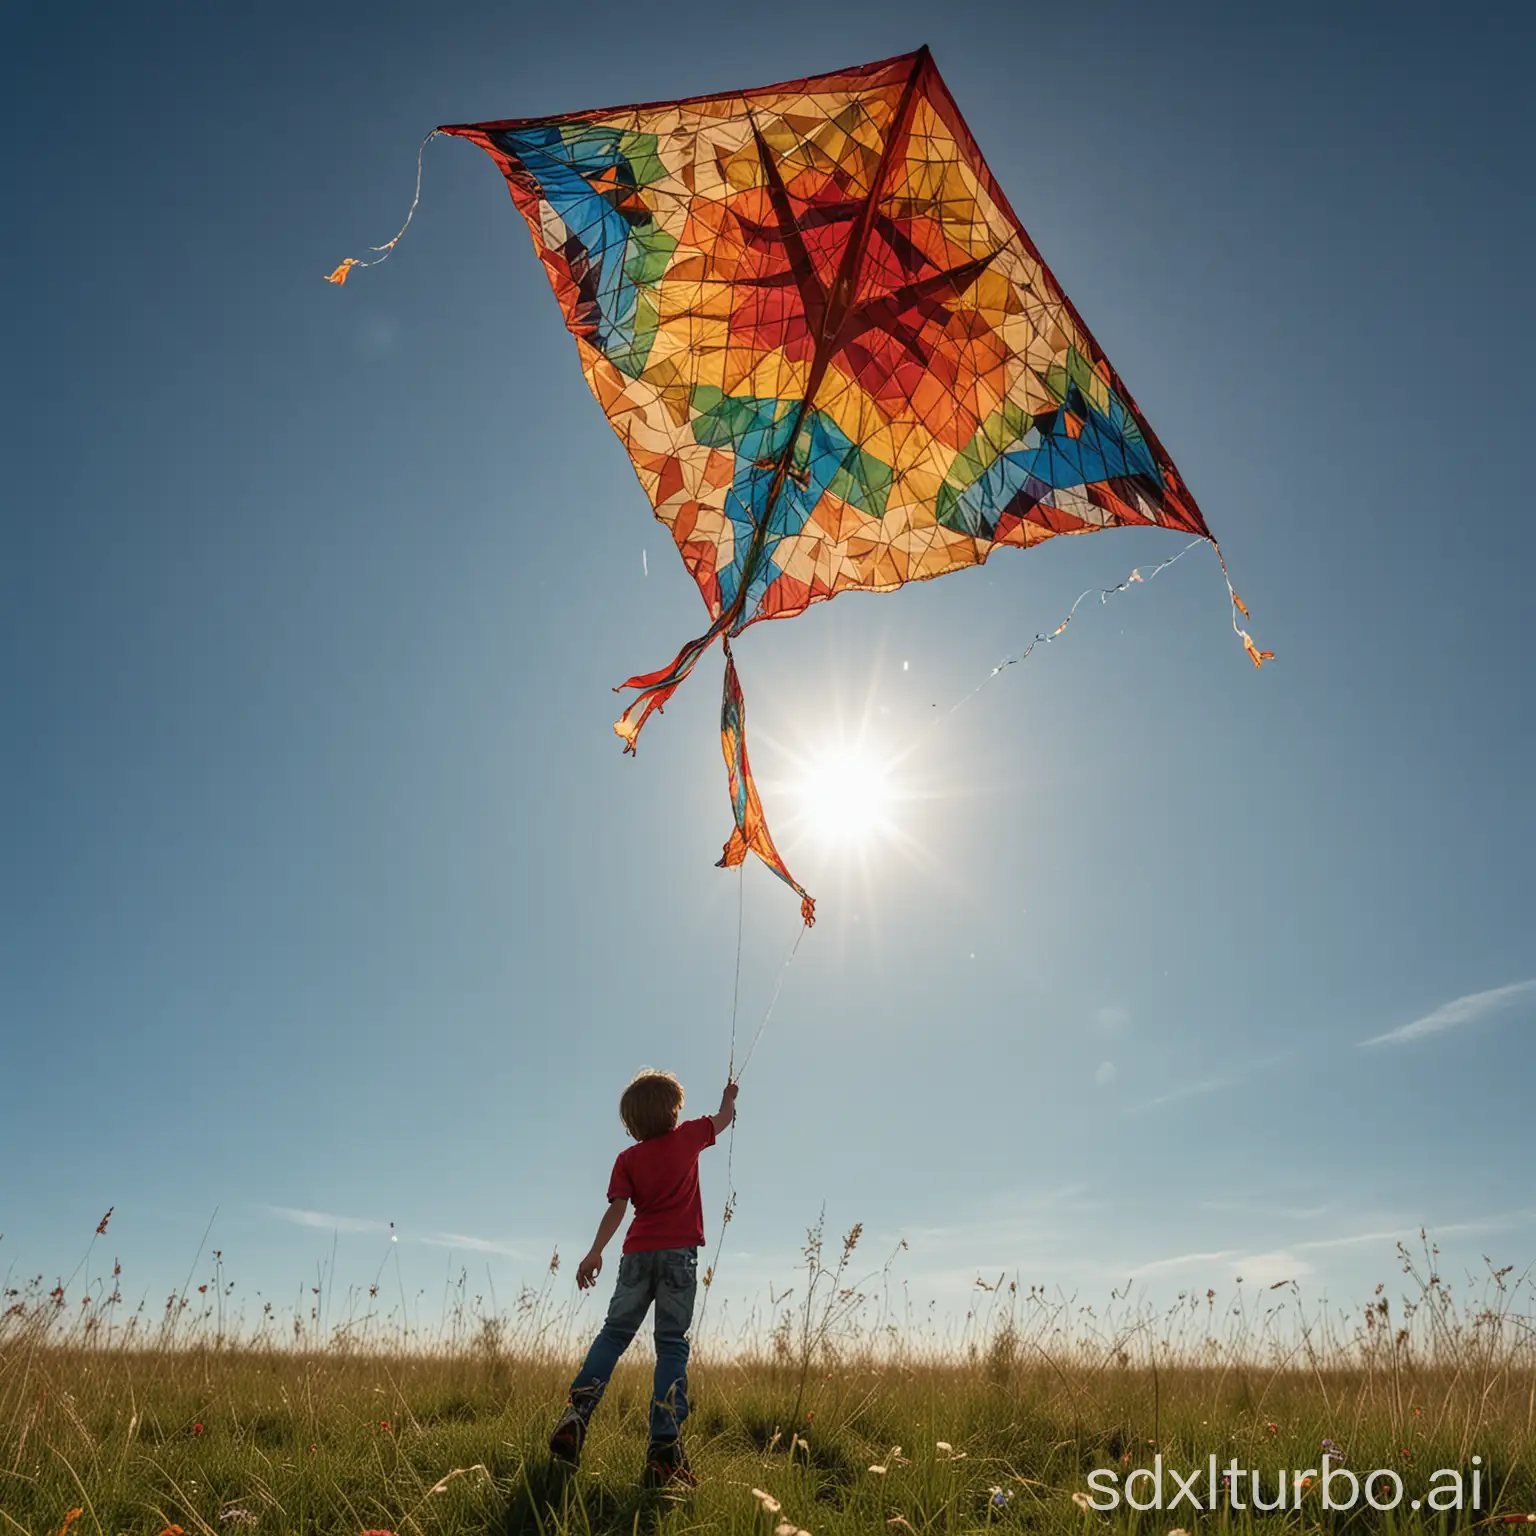 Vibrant-Kite-Flying-Fun-in-Clear-Blue-Skies-Kids-Enjoying-Colorful-Kite-Flying